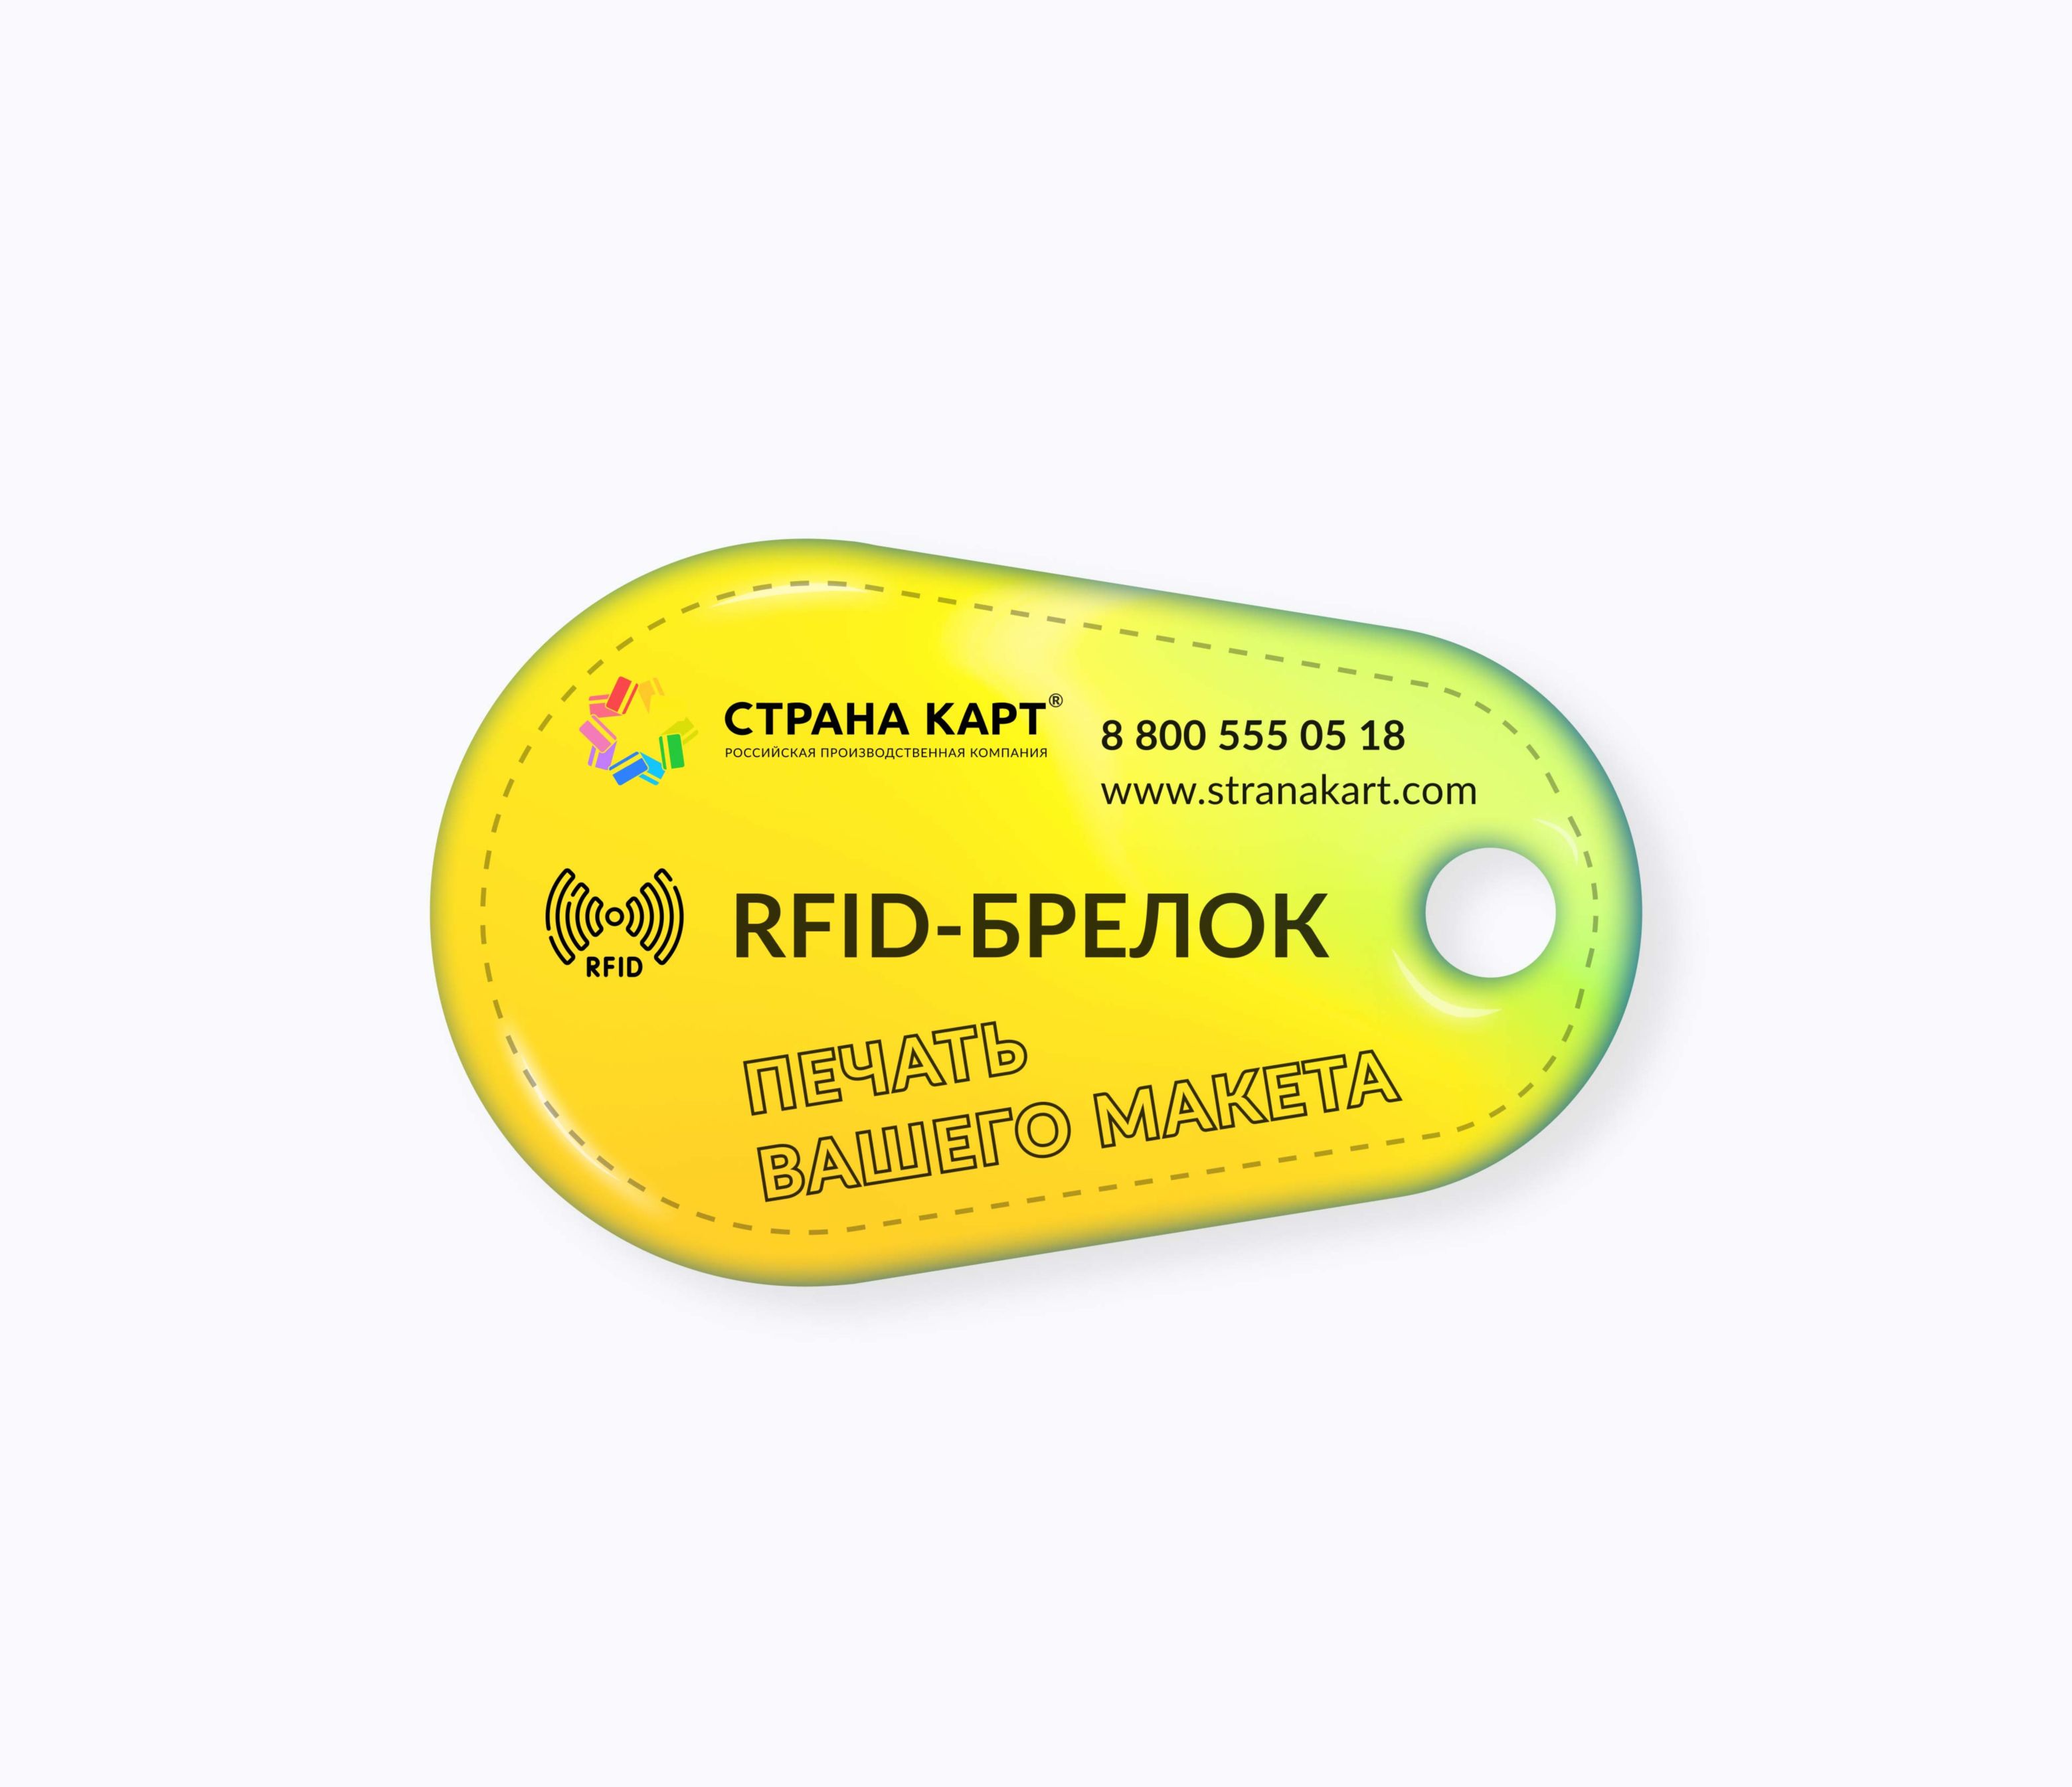 Каплевидные RFID-брелоки NEOKEY® с чипом для букмекерских клубов RFID-брелоки NEOKEY® с чипом для букмекерских клубов